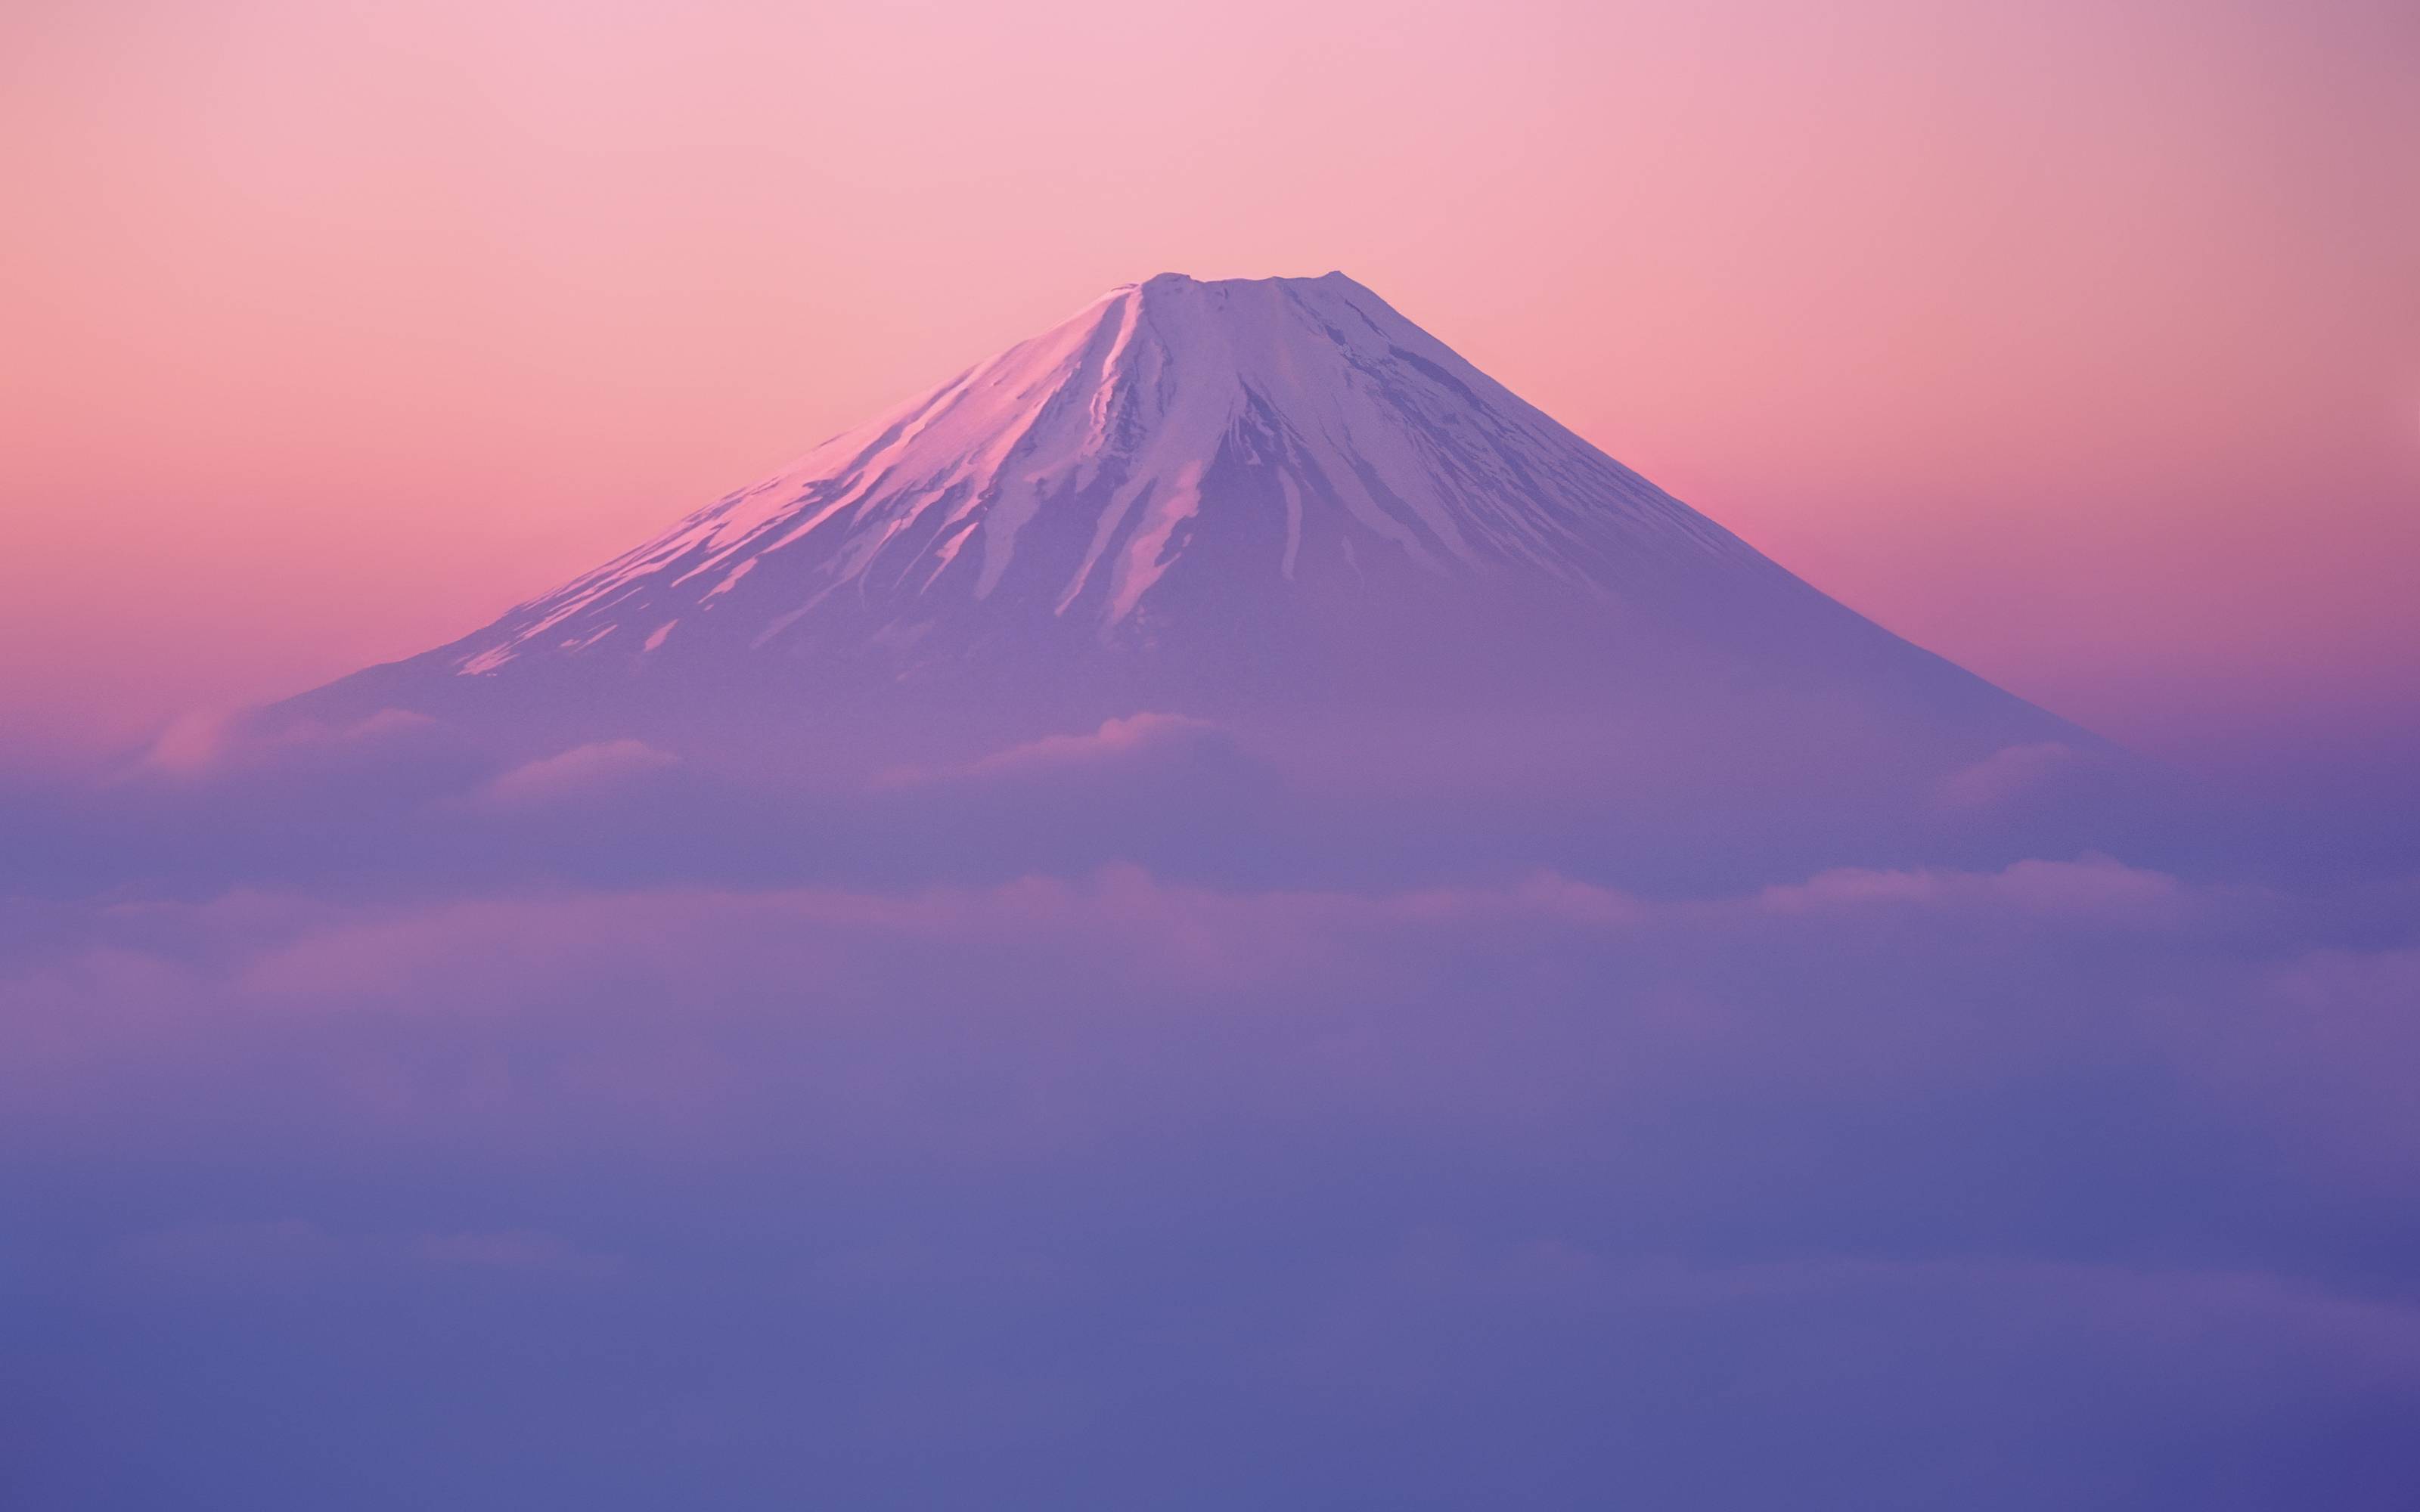 New Mt Fuji Wallpaper in Mac OS X Lion Developer Preview 2